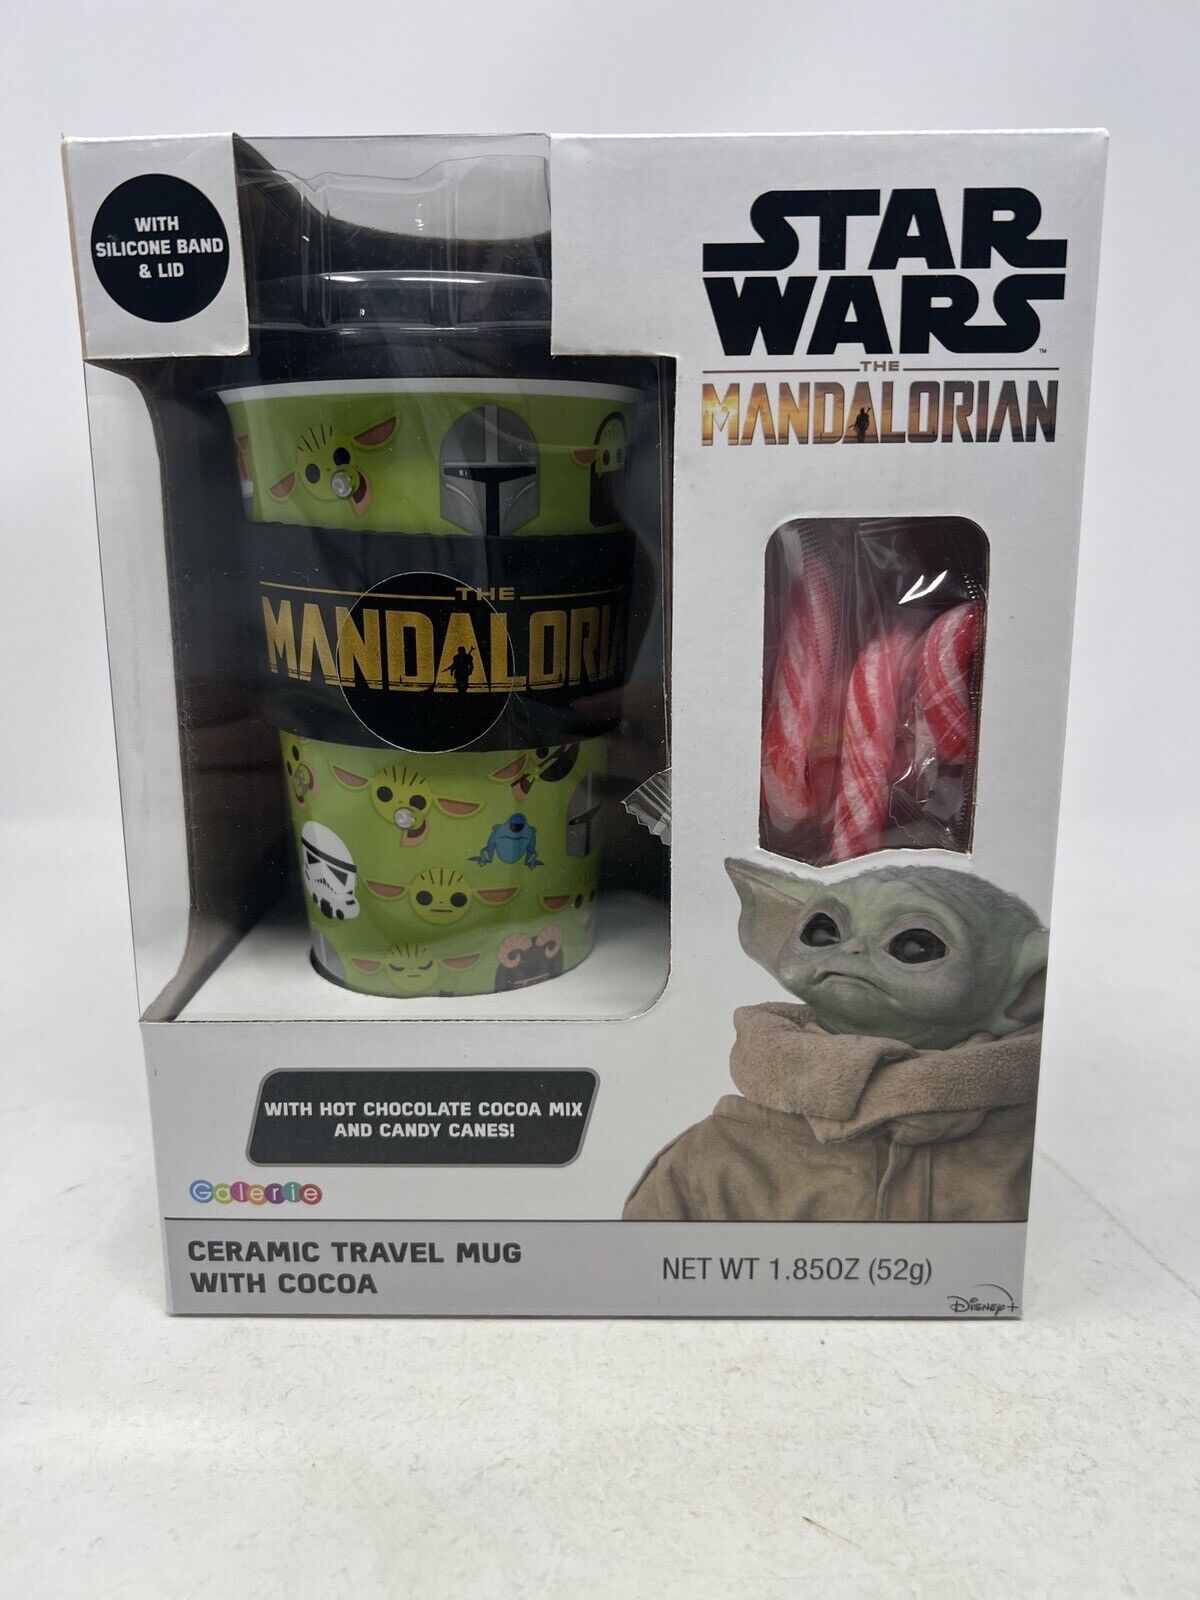 STAR WARS The Mandalorian (Baby Yoda) CERAMIC TRAVEL MUG WITH COCOA GIFT SET